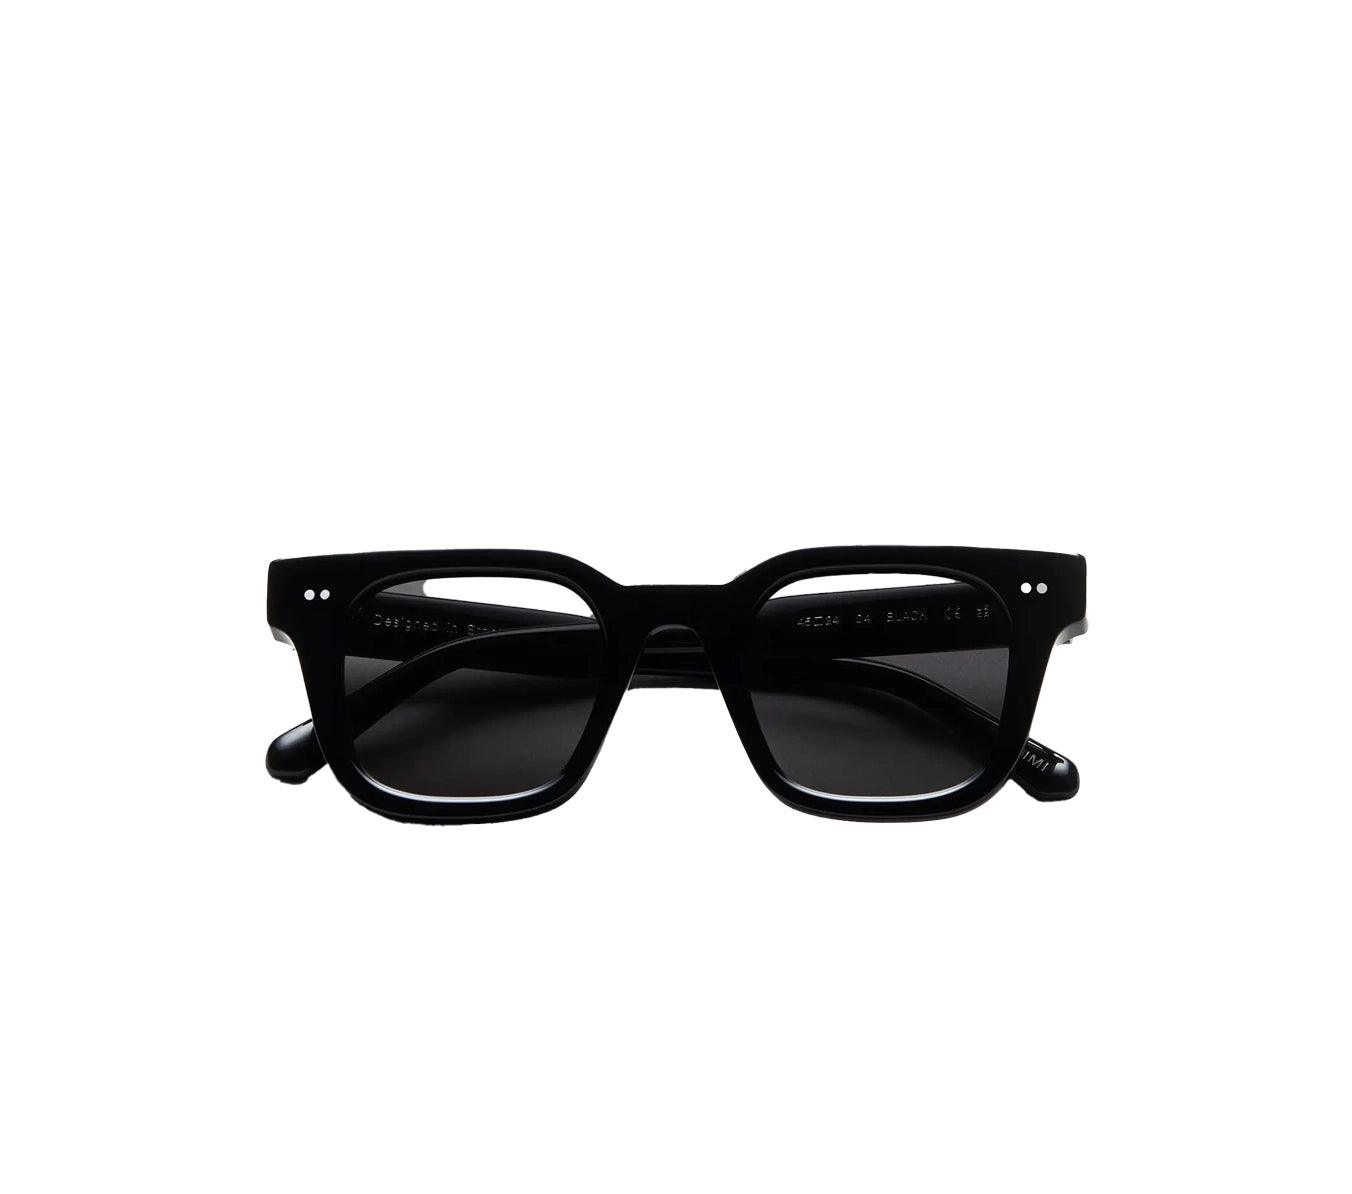 CHIMI 04 - Black - One size - Sunglasses